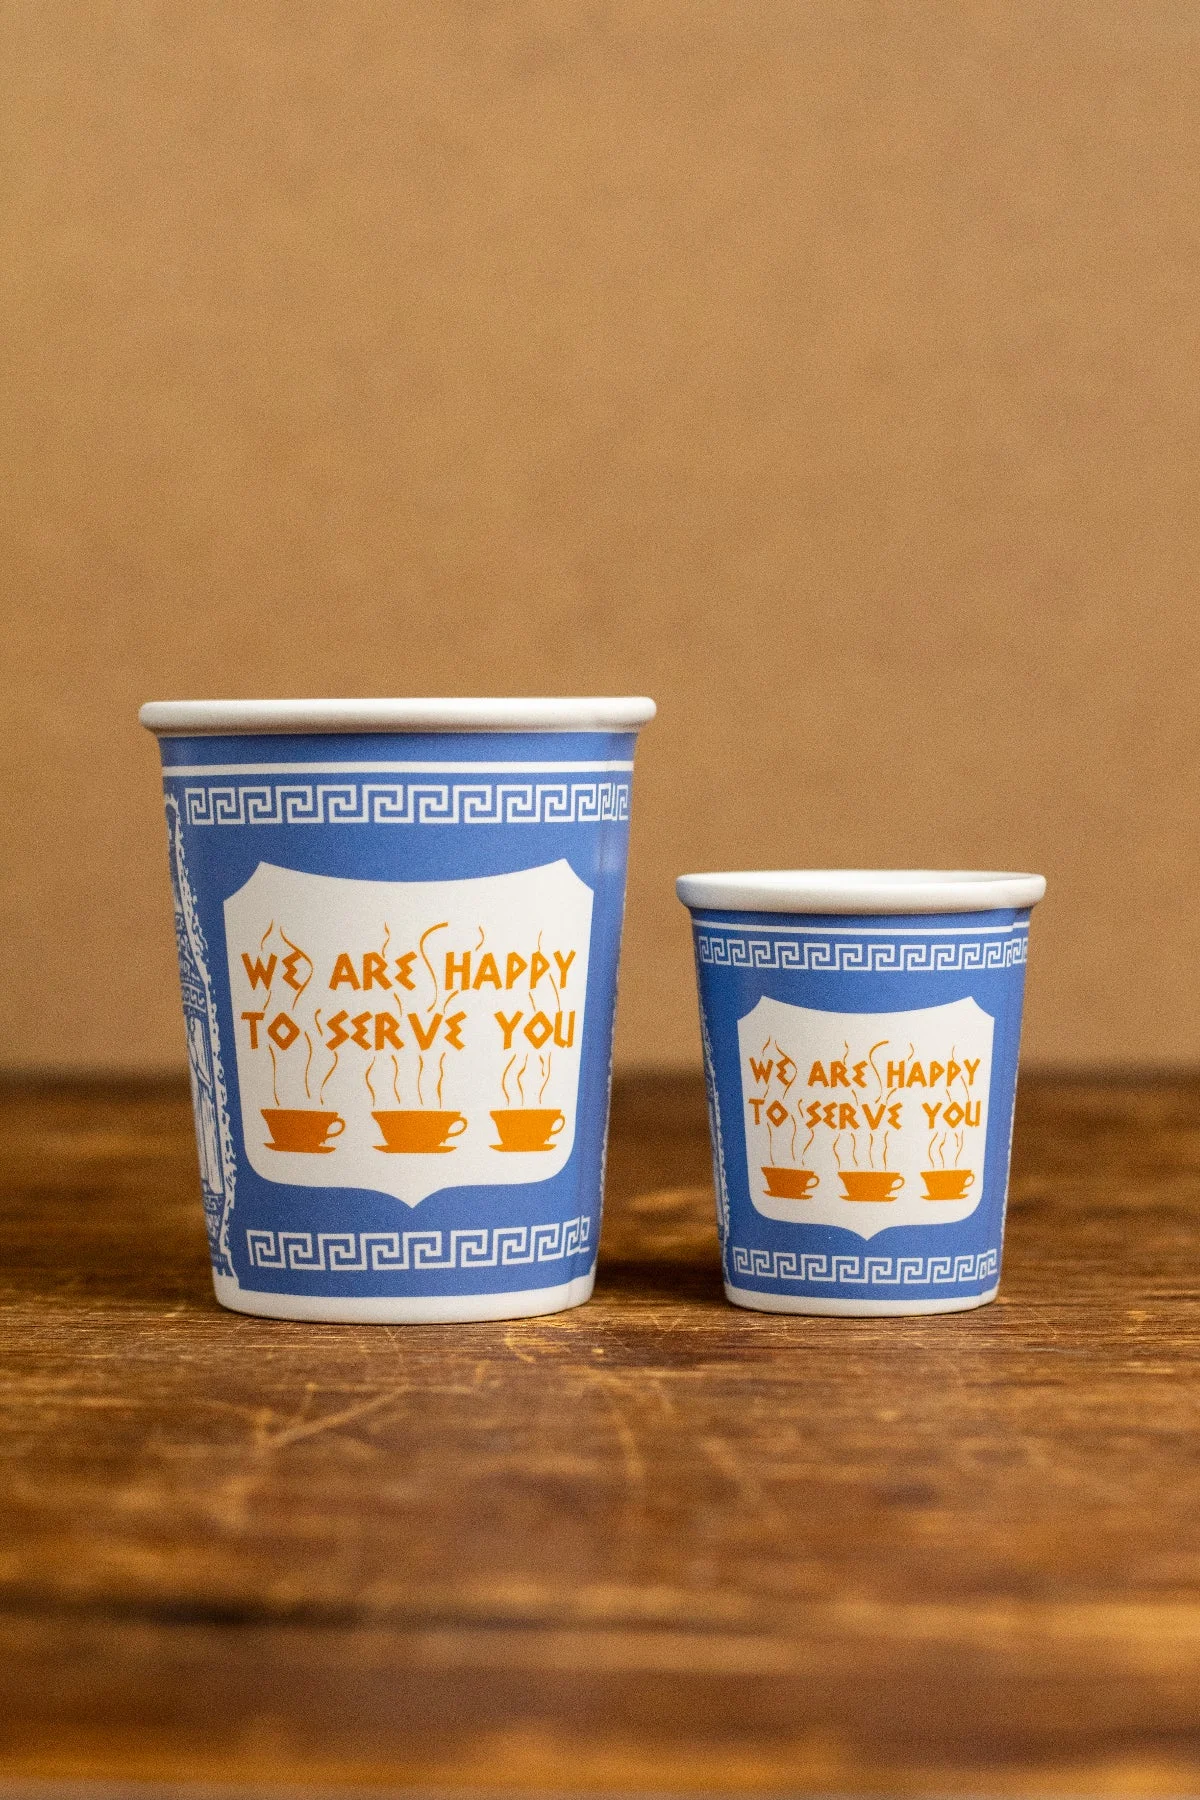 Best NYC Souvenir Ideas, we are happy to serve you mug